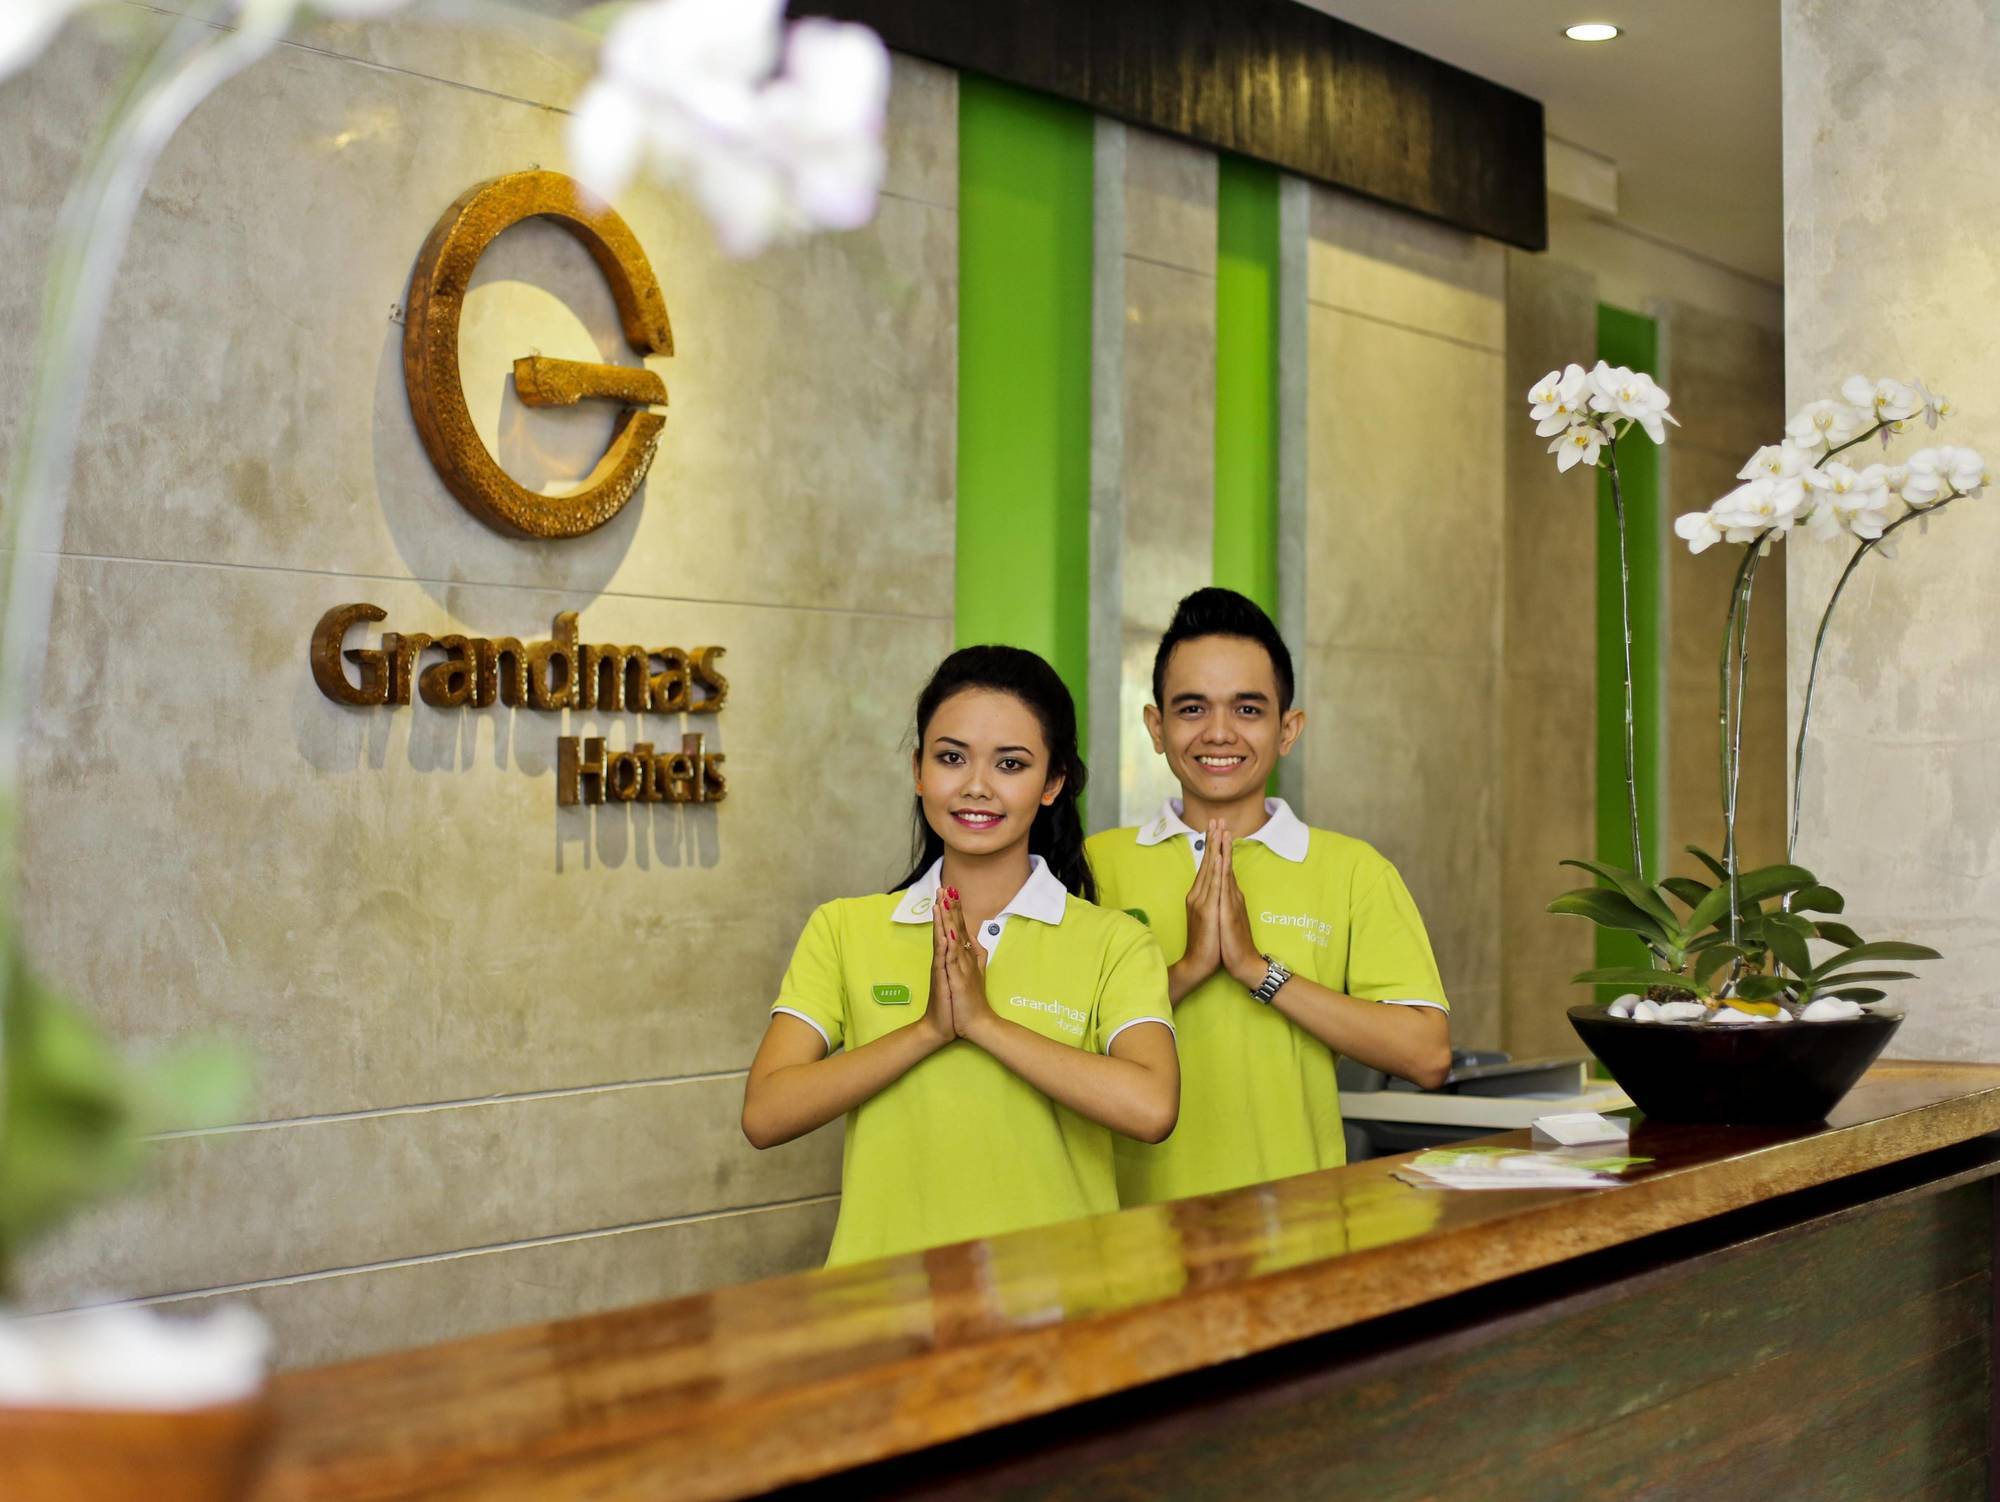 Grandmas Plus Hotel Airport Kuta Lombok Eksteriør bilde